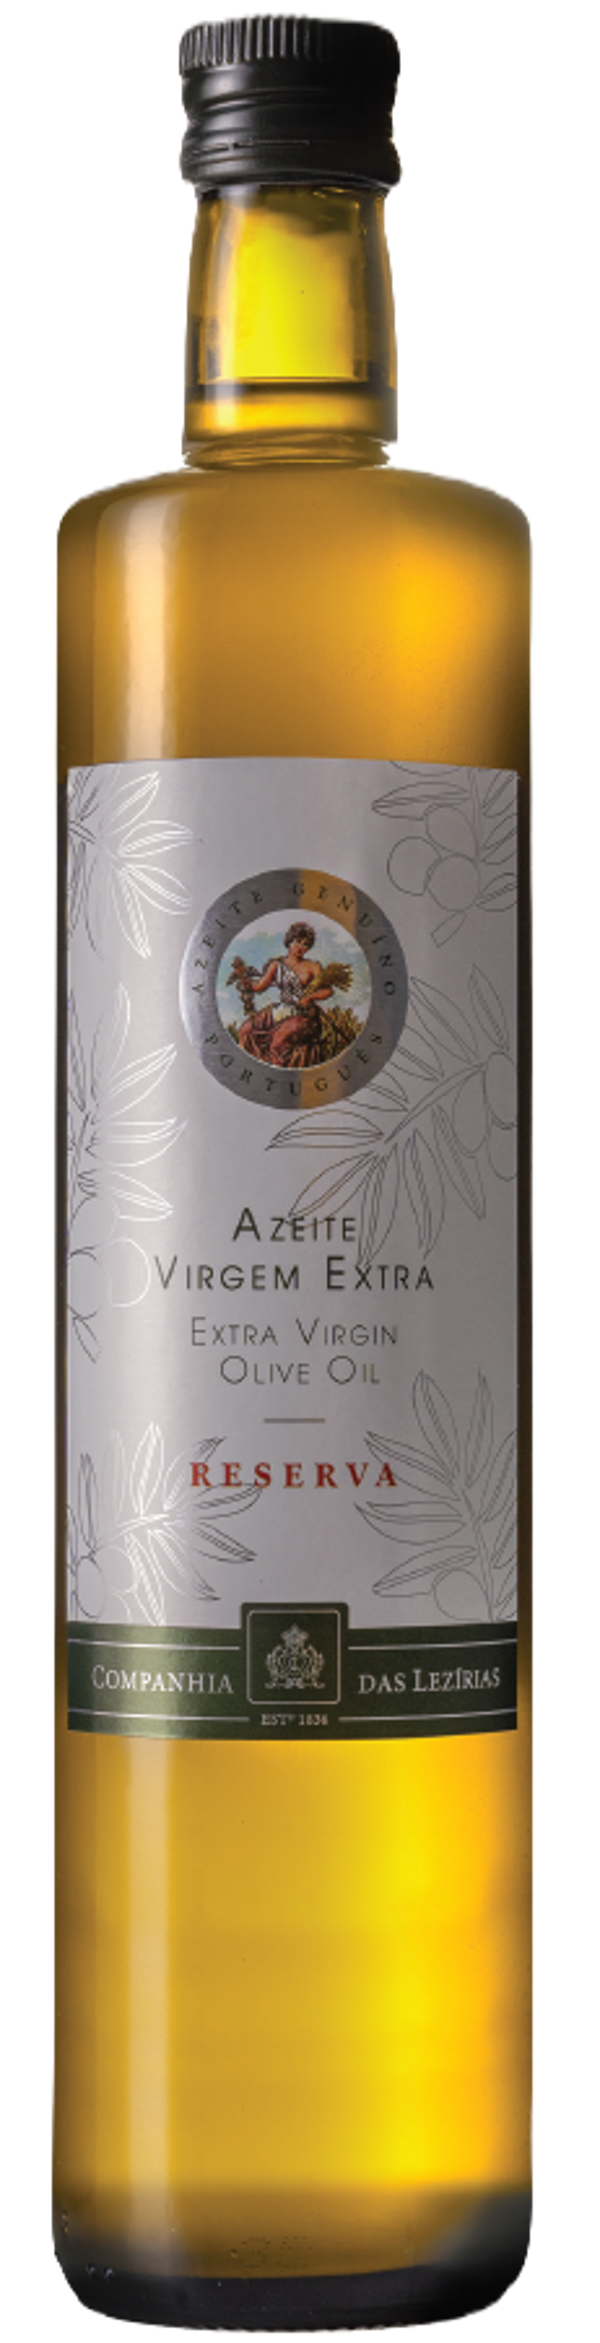 Azeite Virgem Extra Reserva